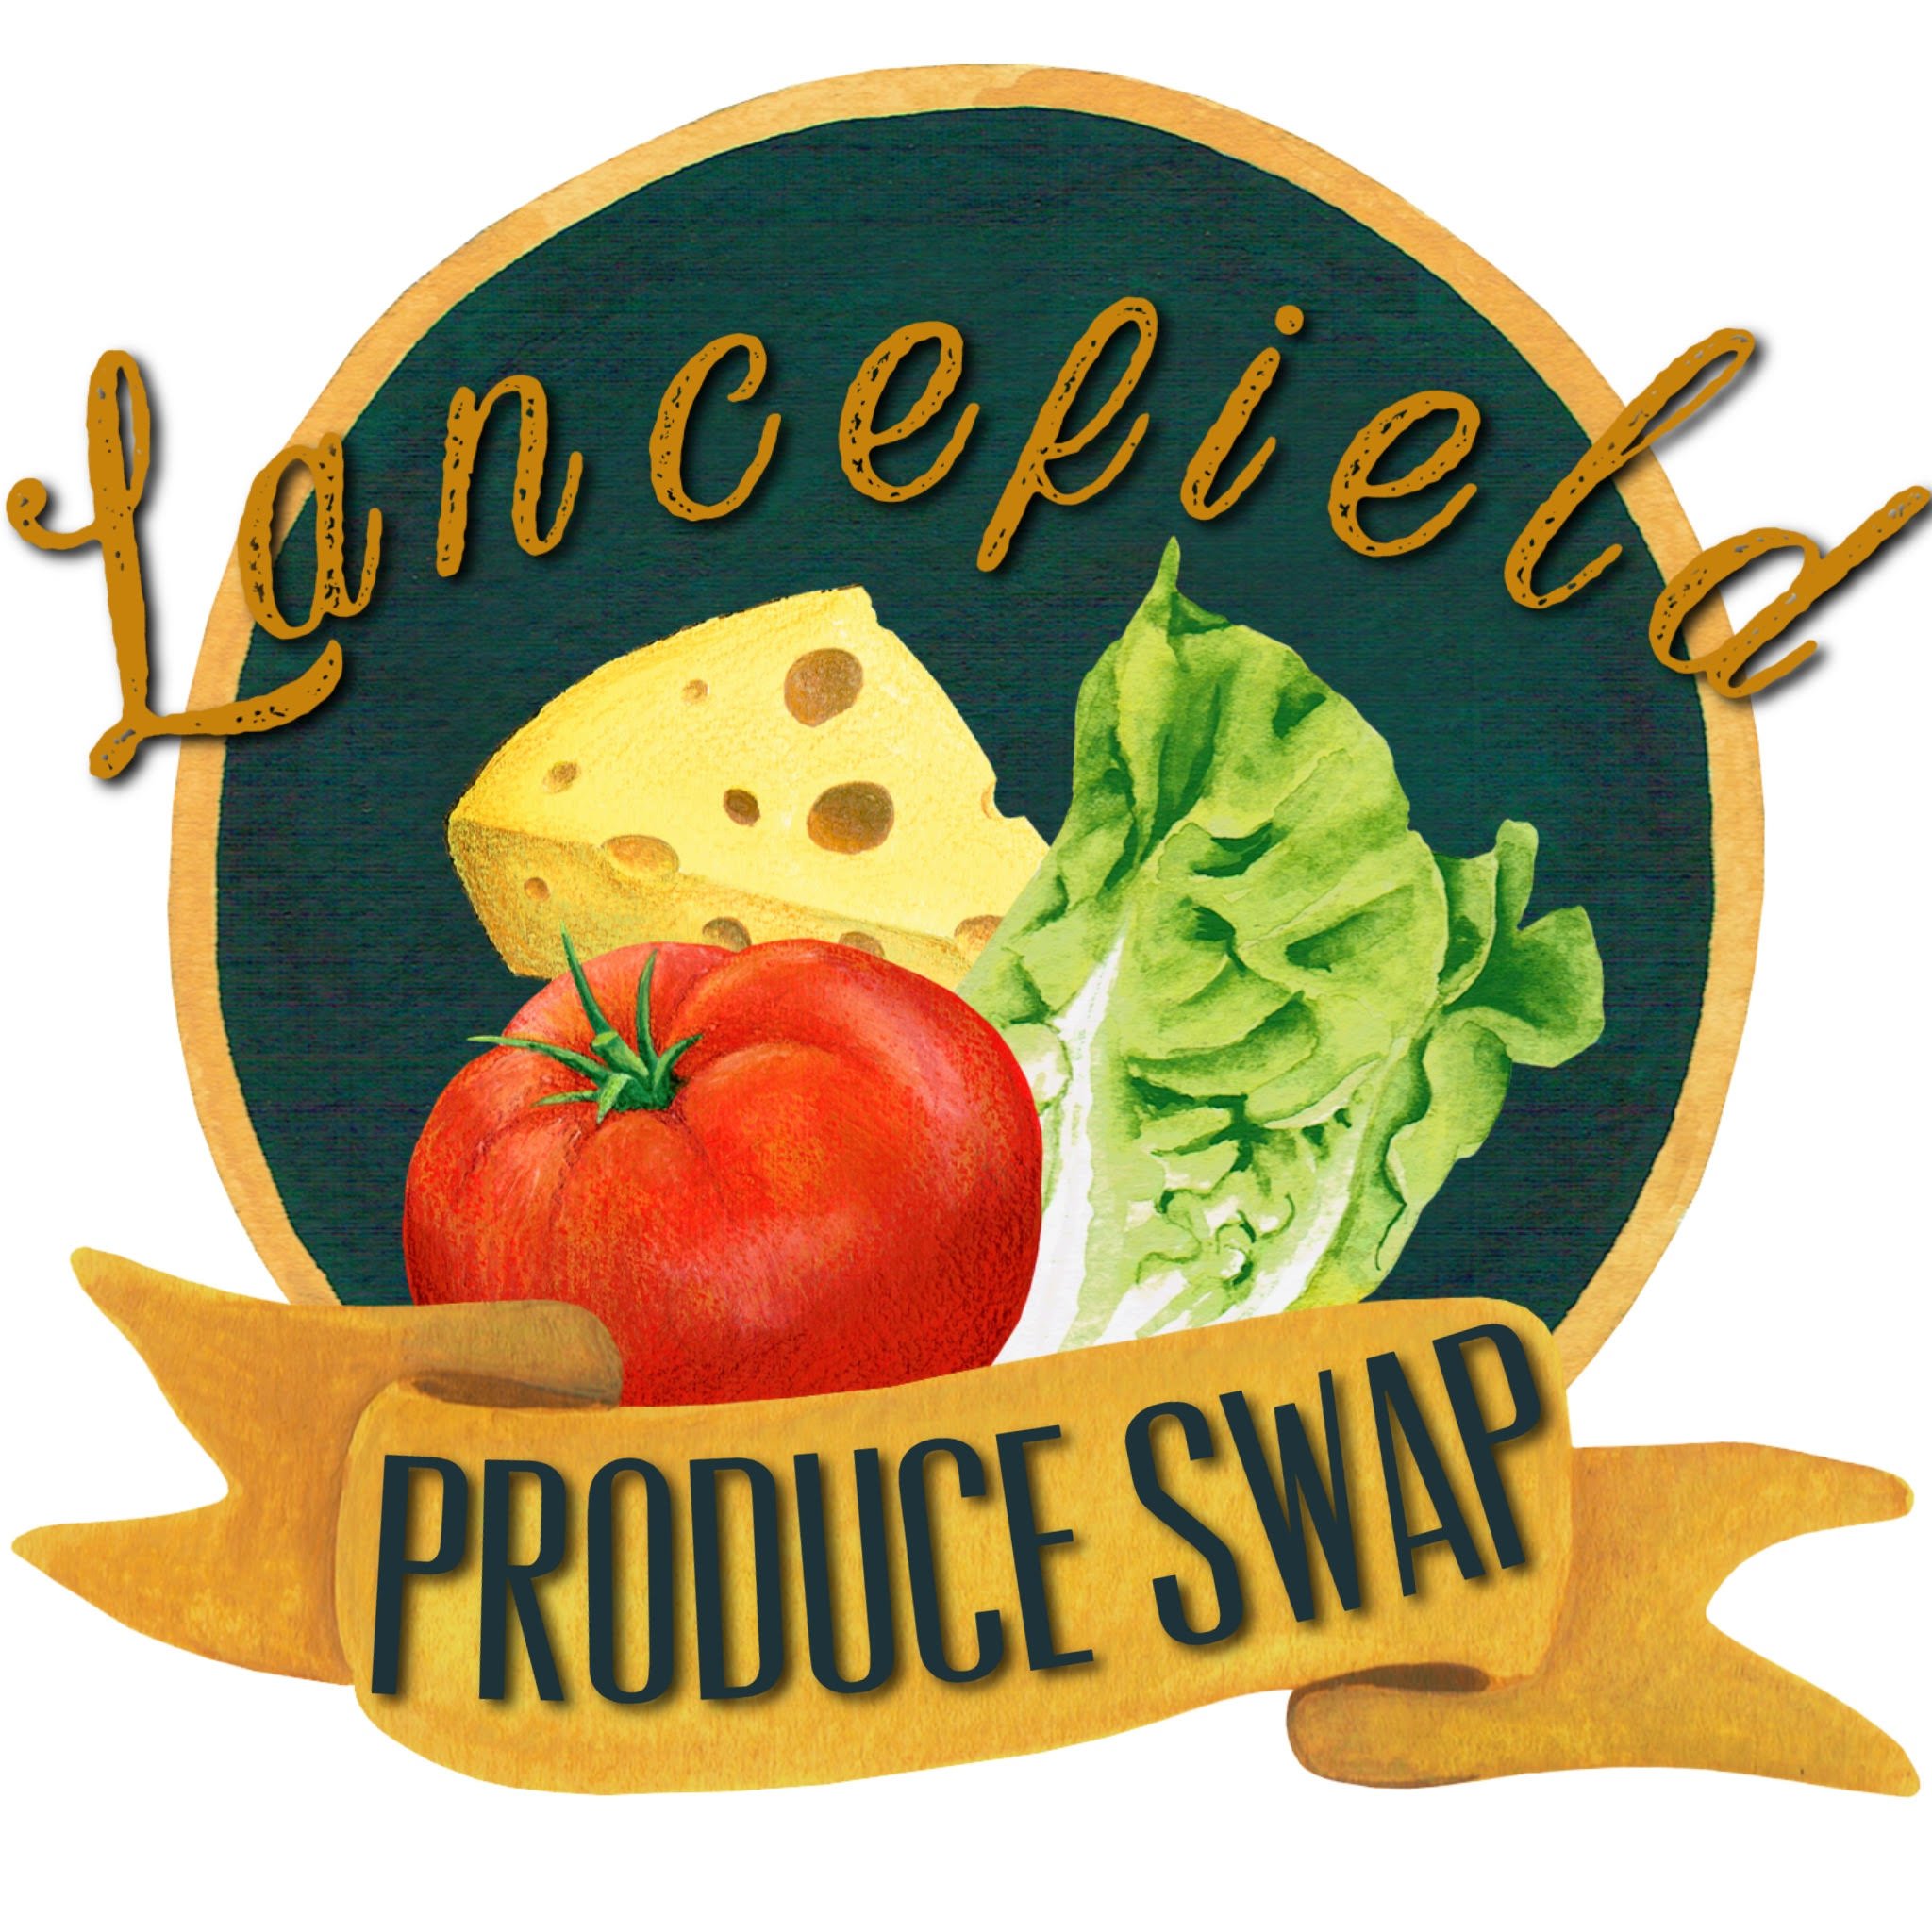 lancefield produce logo.jpg